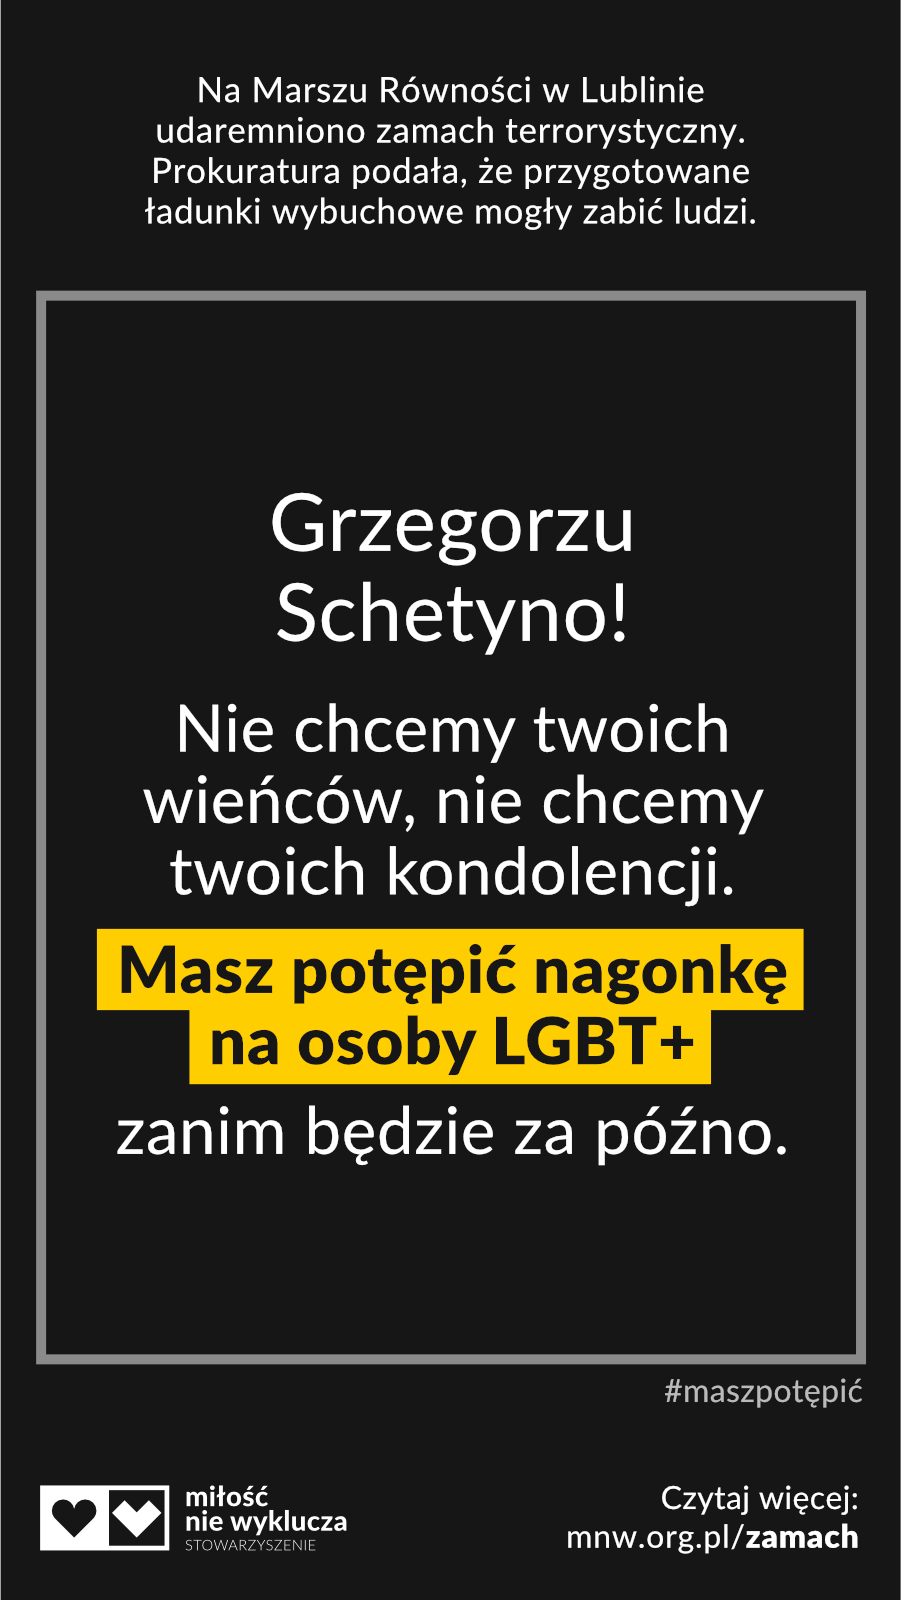 Schetyna #maszpotepic zamach LGBT